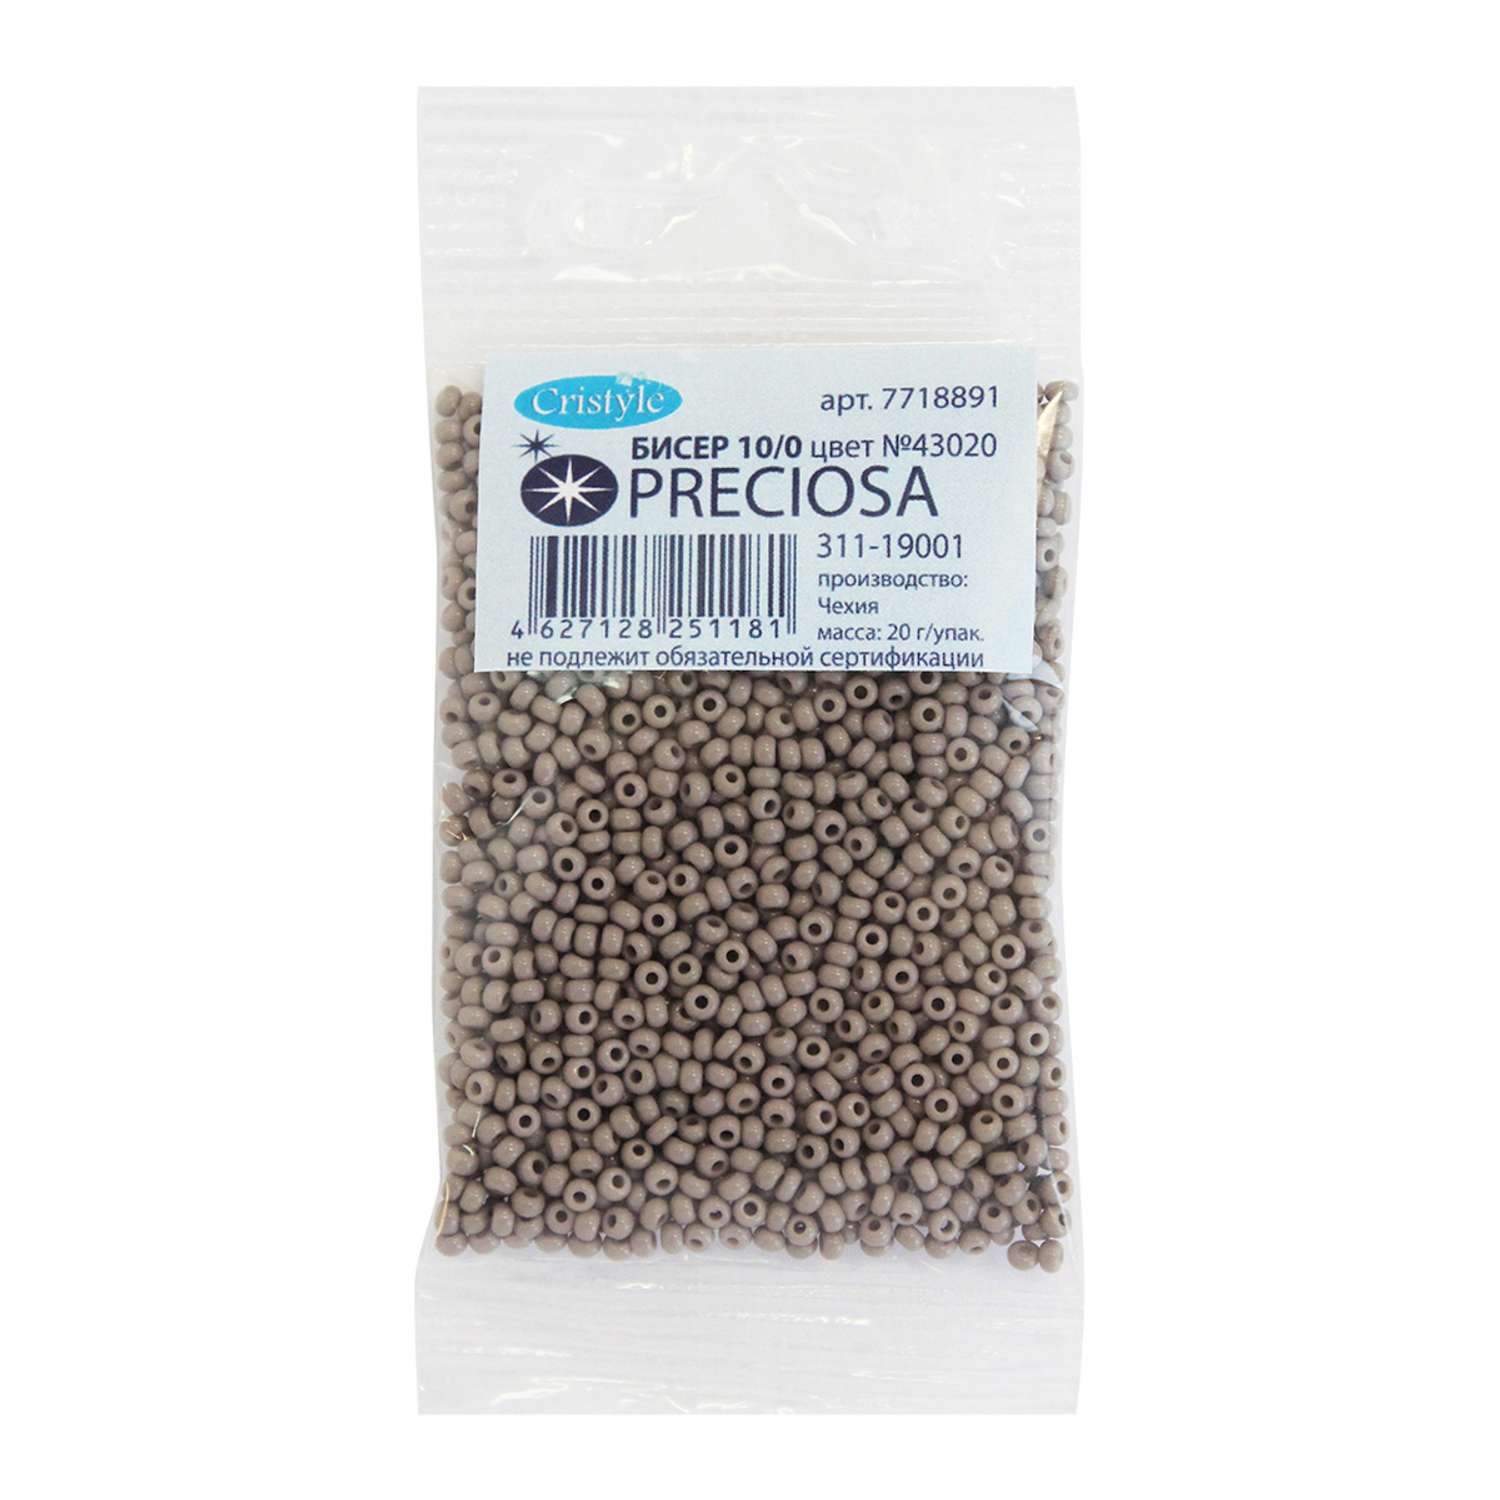 Бисер Preciosa чешский непрозрачный 10/0 20 гр Прециоза 43020 темно-серый - фото 1